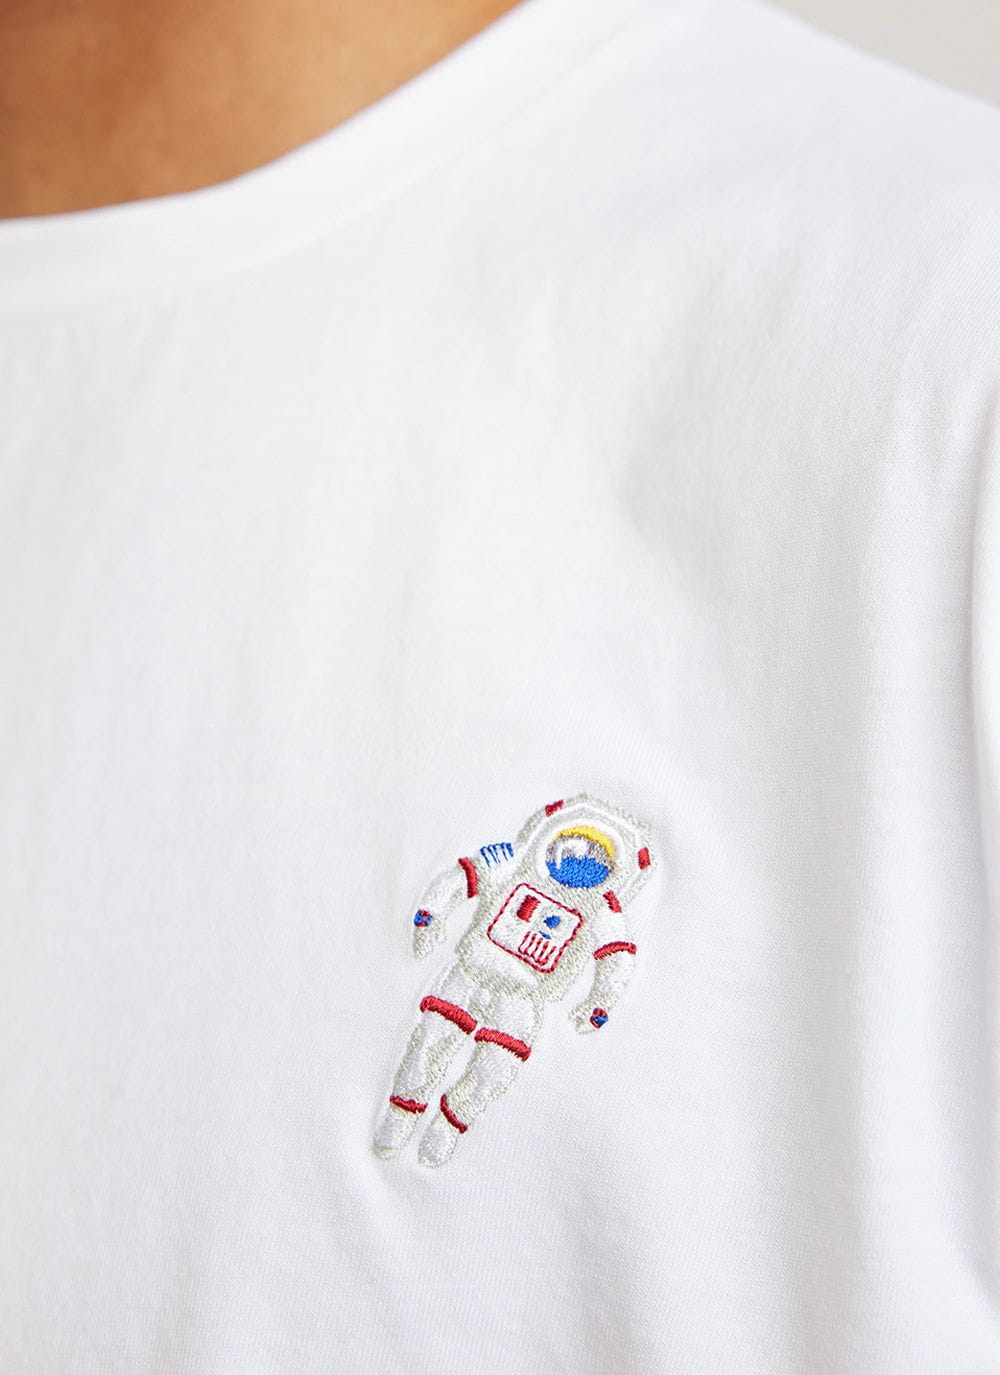 Chris Hadfield Skateboarding Astronaut Women's T-shirt